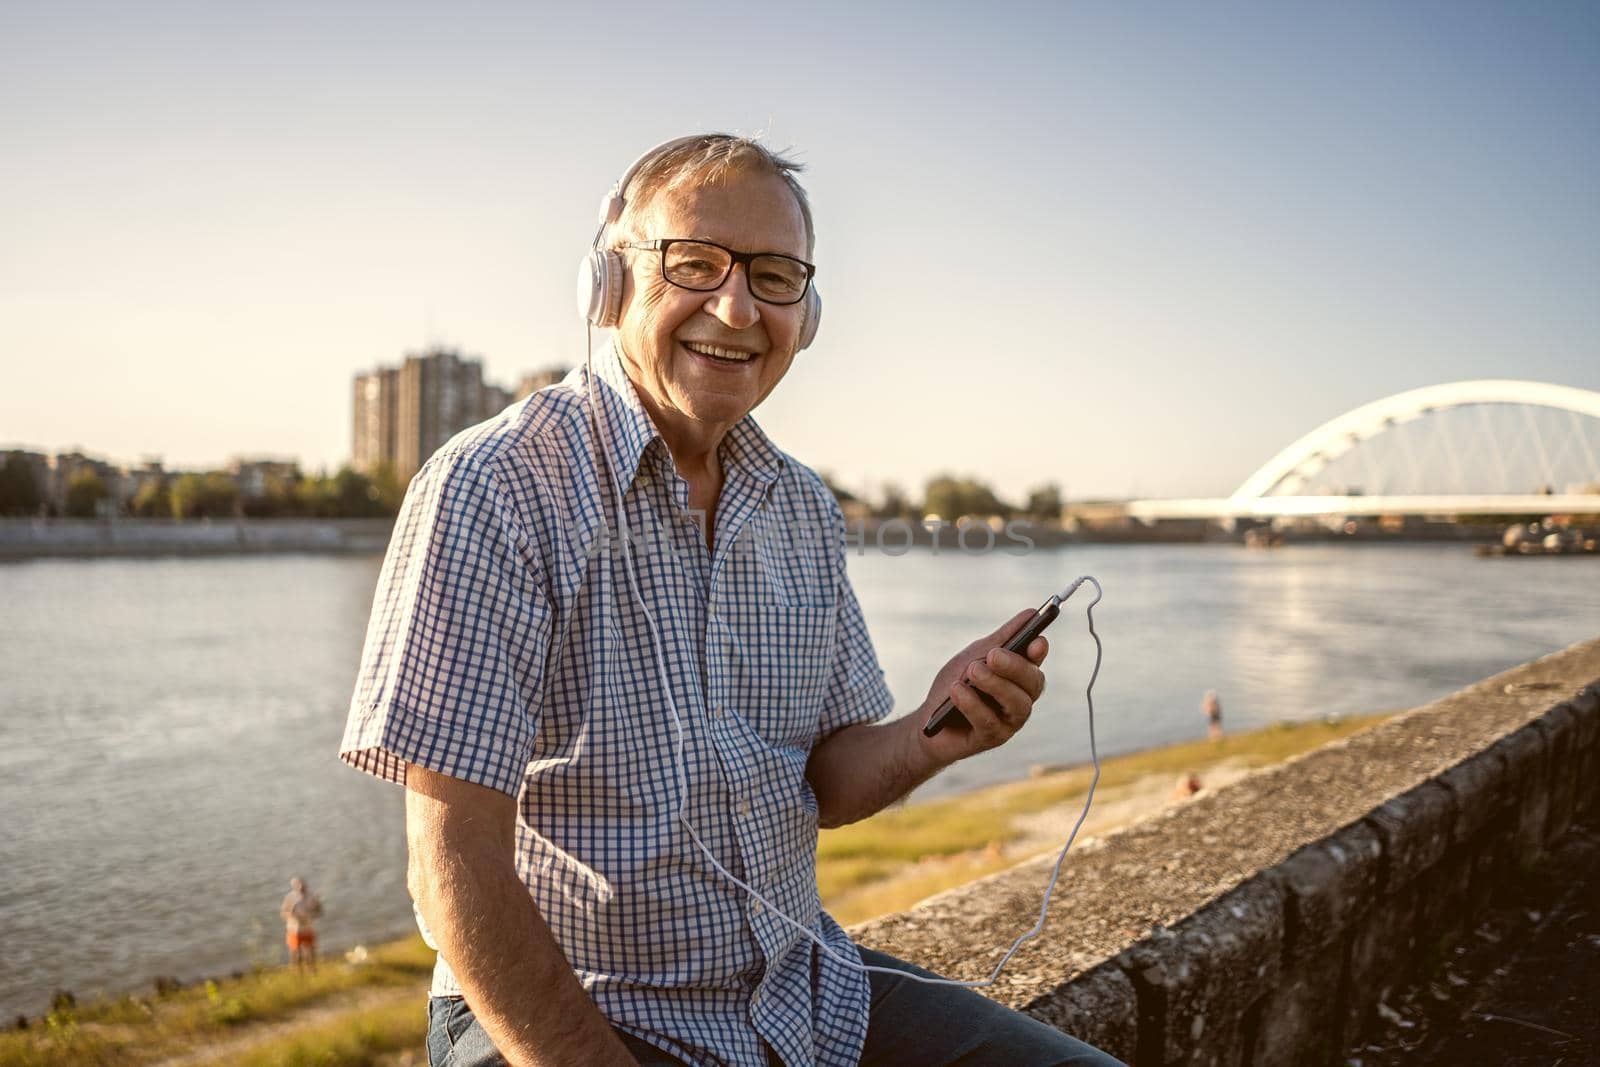 Outdoor portrait of senior man who is listening music on headphones.